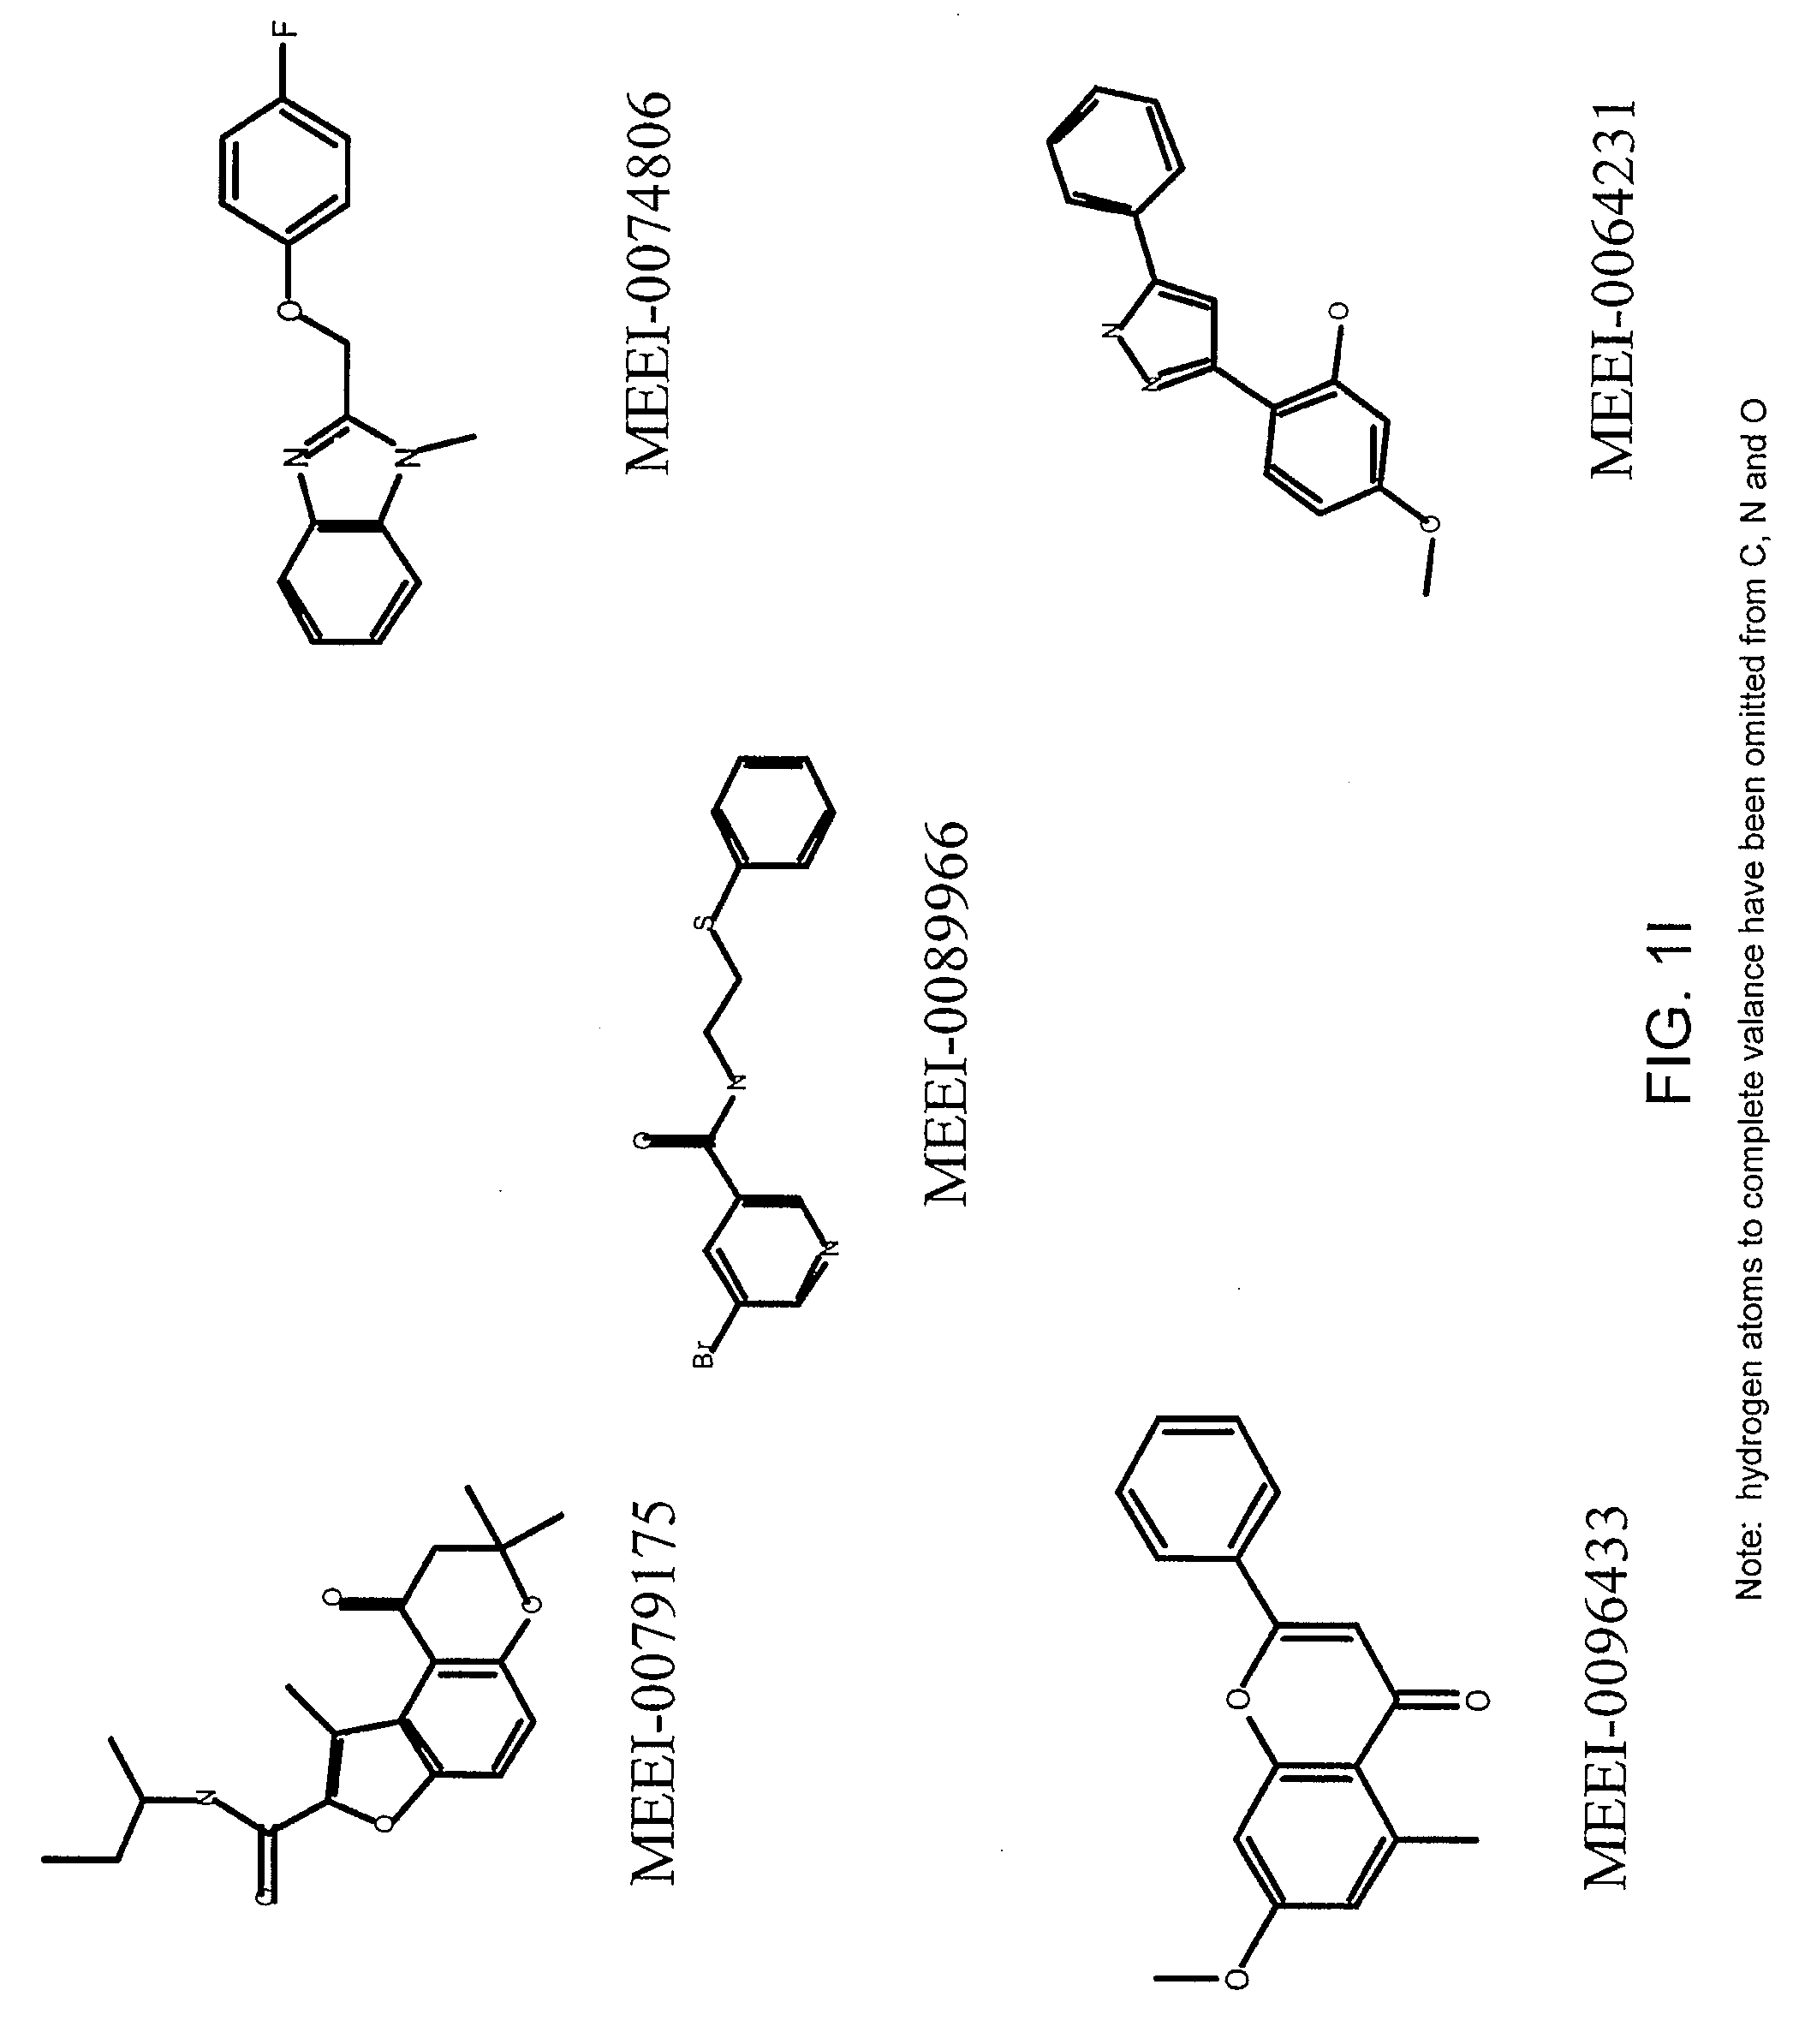 Compounds that enhance atoh1 expression